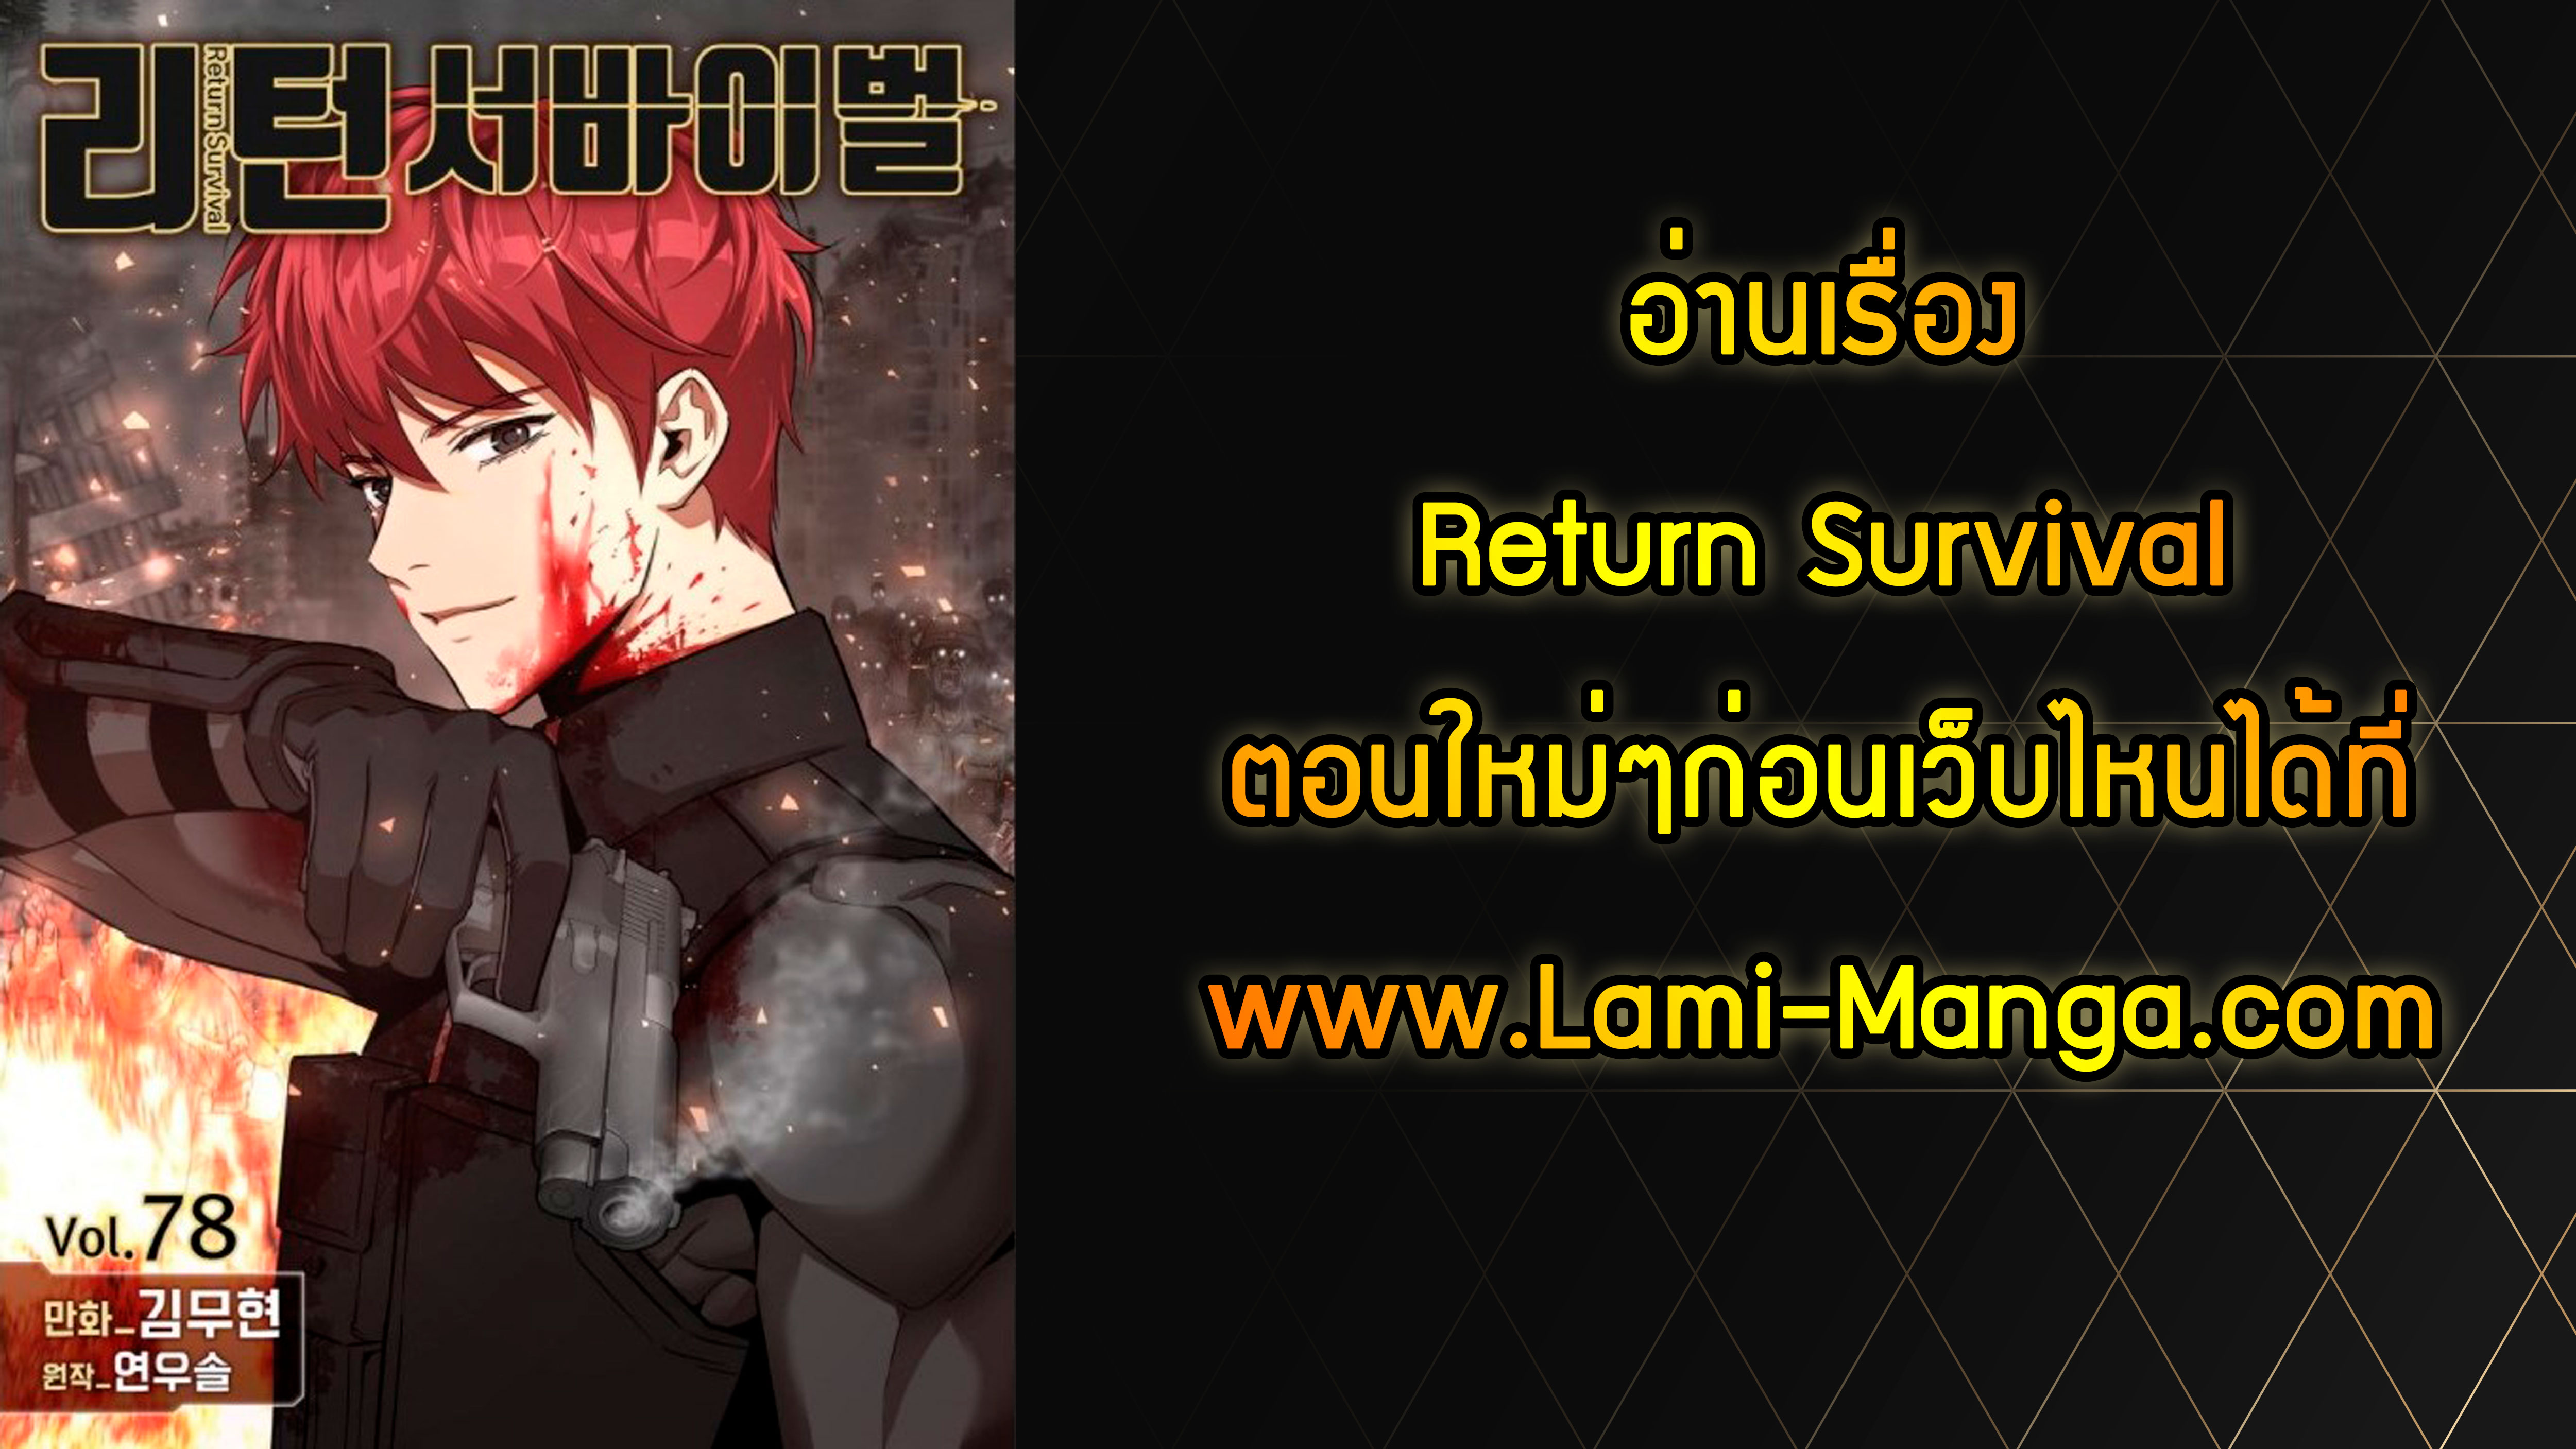 Return Survival 55 (6)